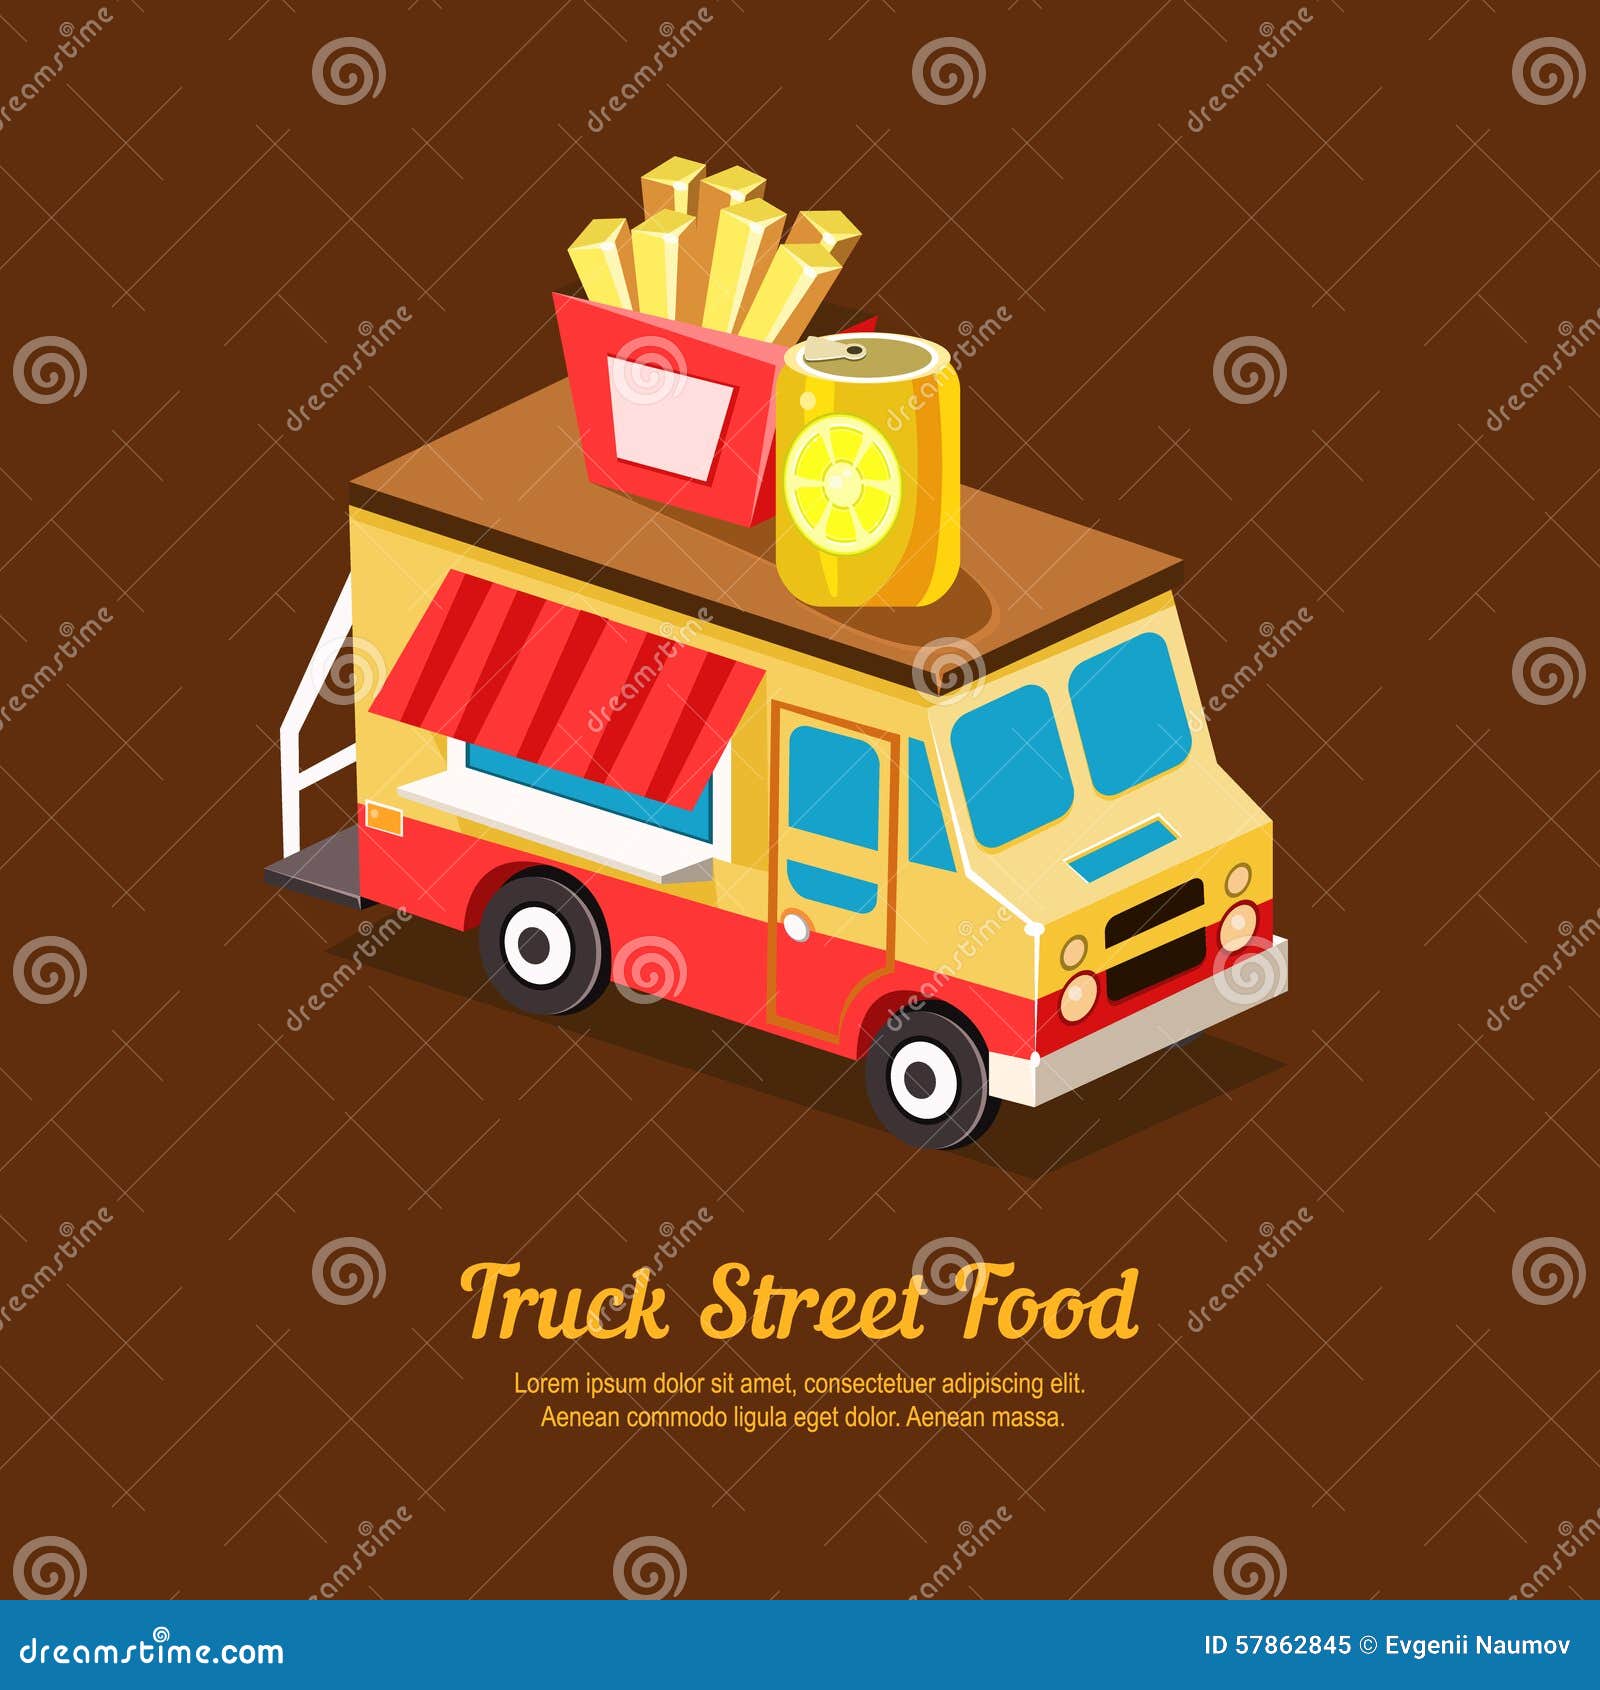 Mobile Food Van stock vector. Illustration of automobile - 57862845